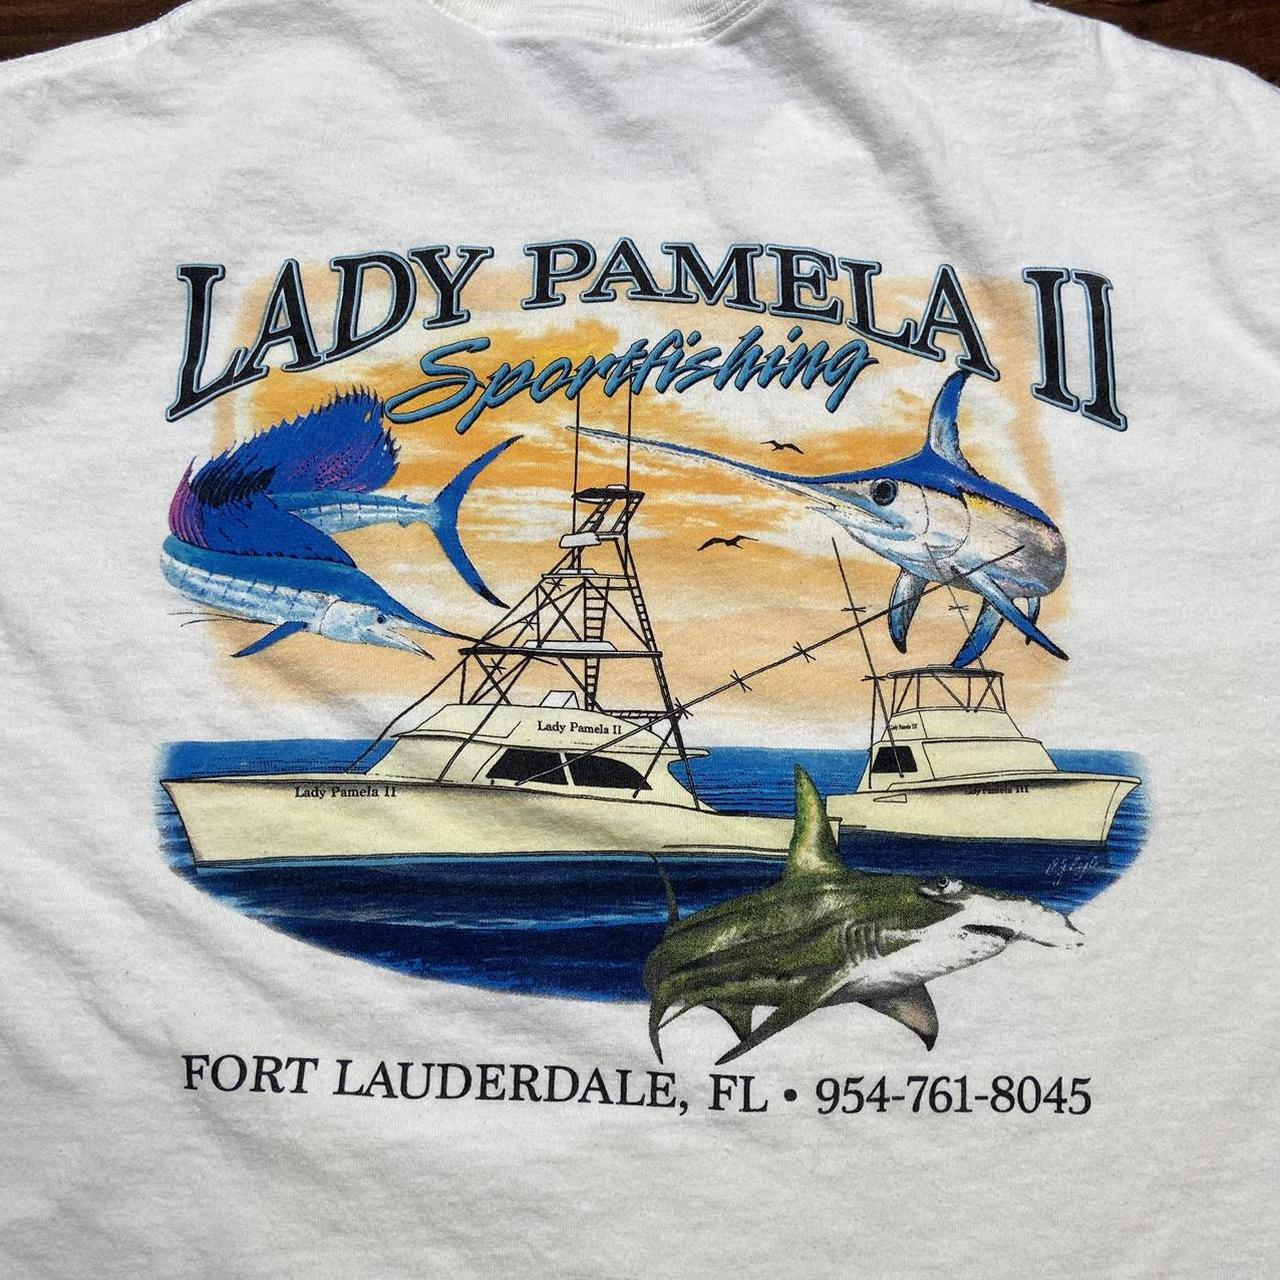 Gildan Brand “Lady Pamela II Sportfishing” graphic